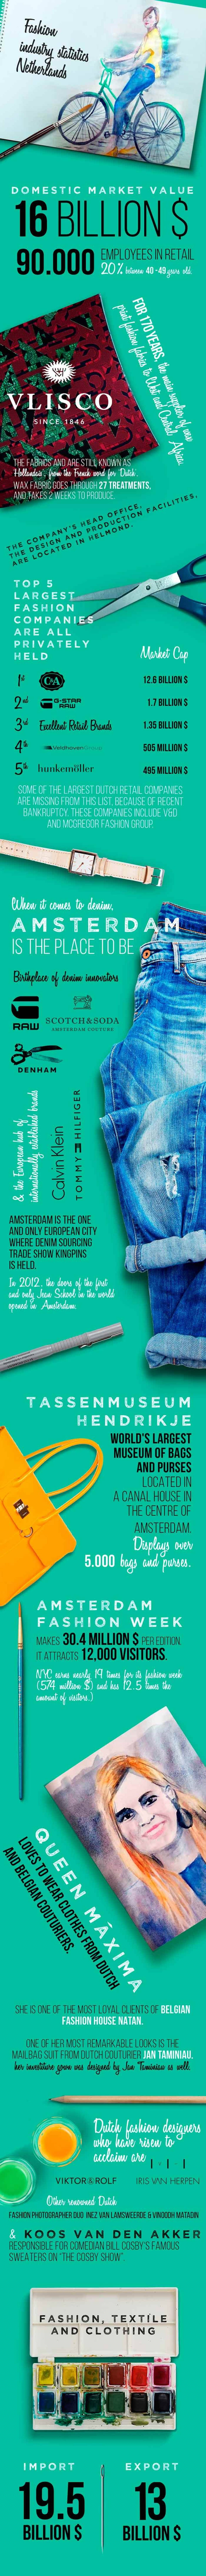 Estadísticas sobre la industria de la moda – Serie de infografías. Parte 5: Holanda